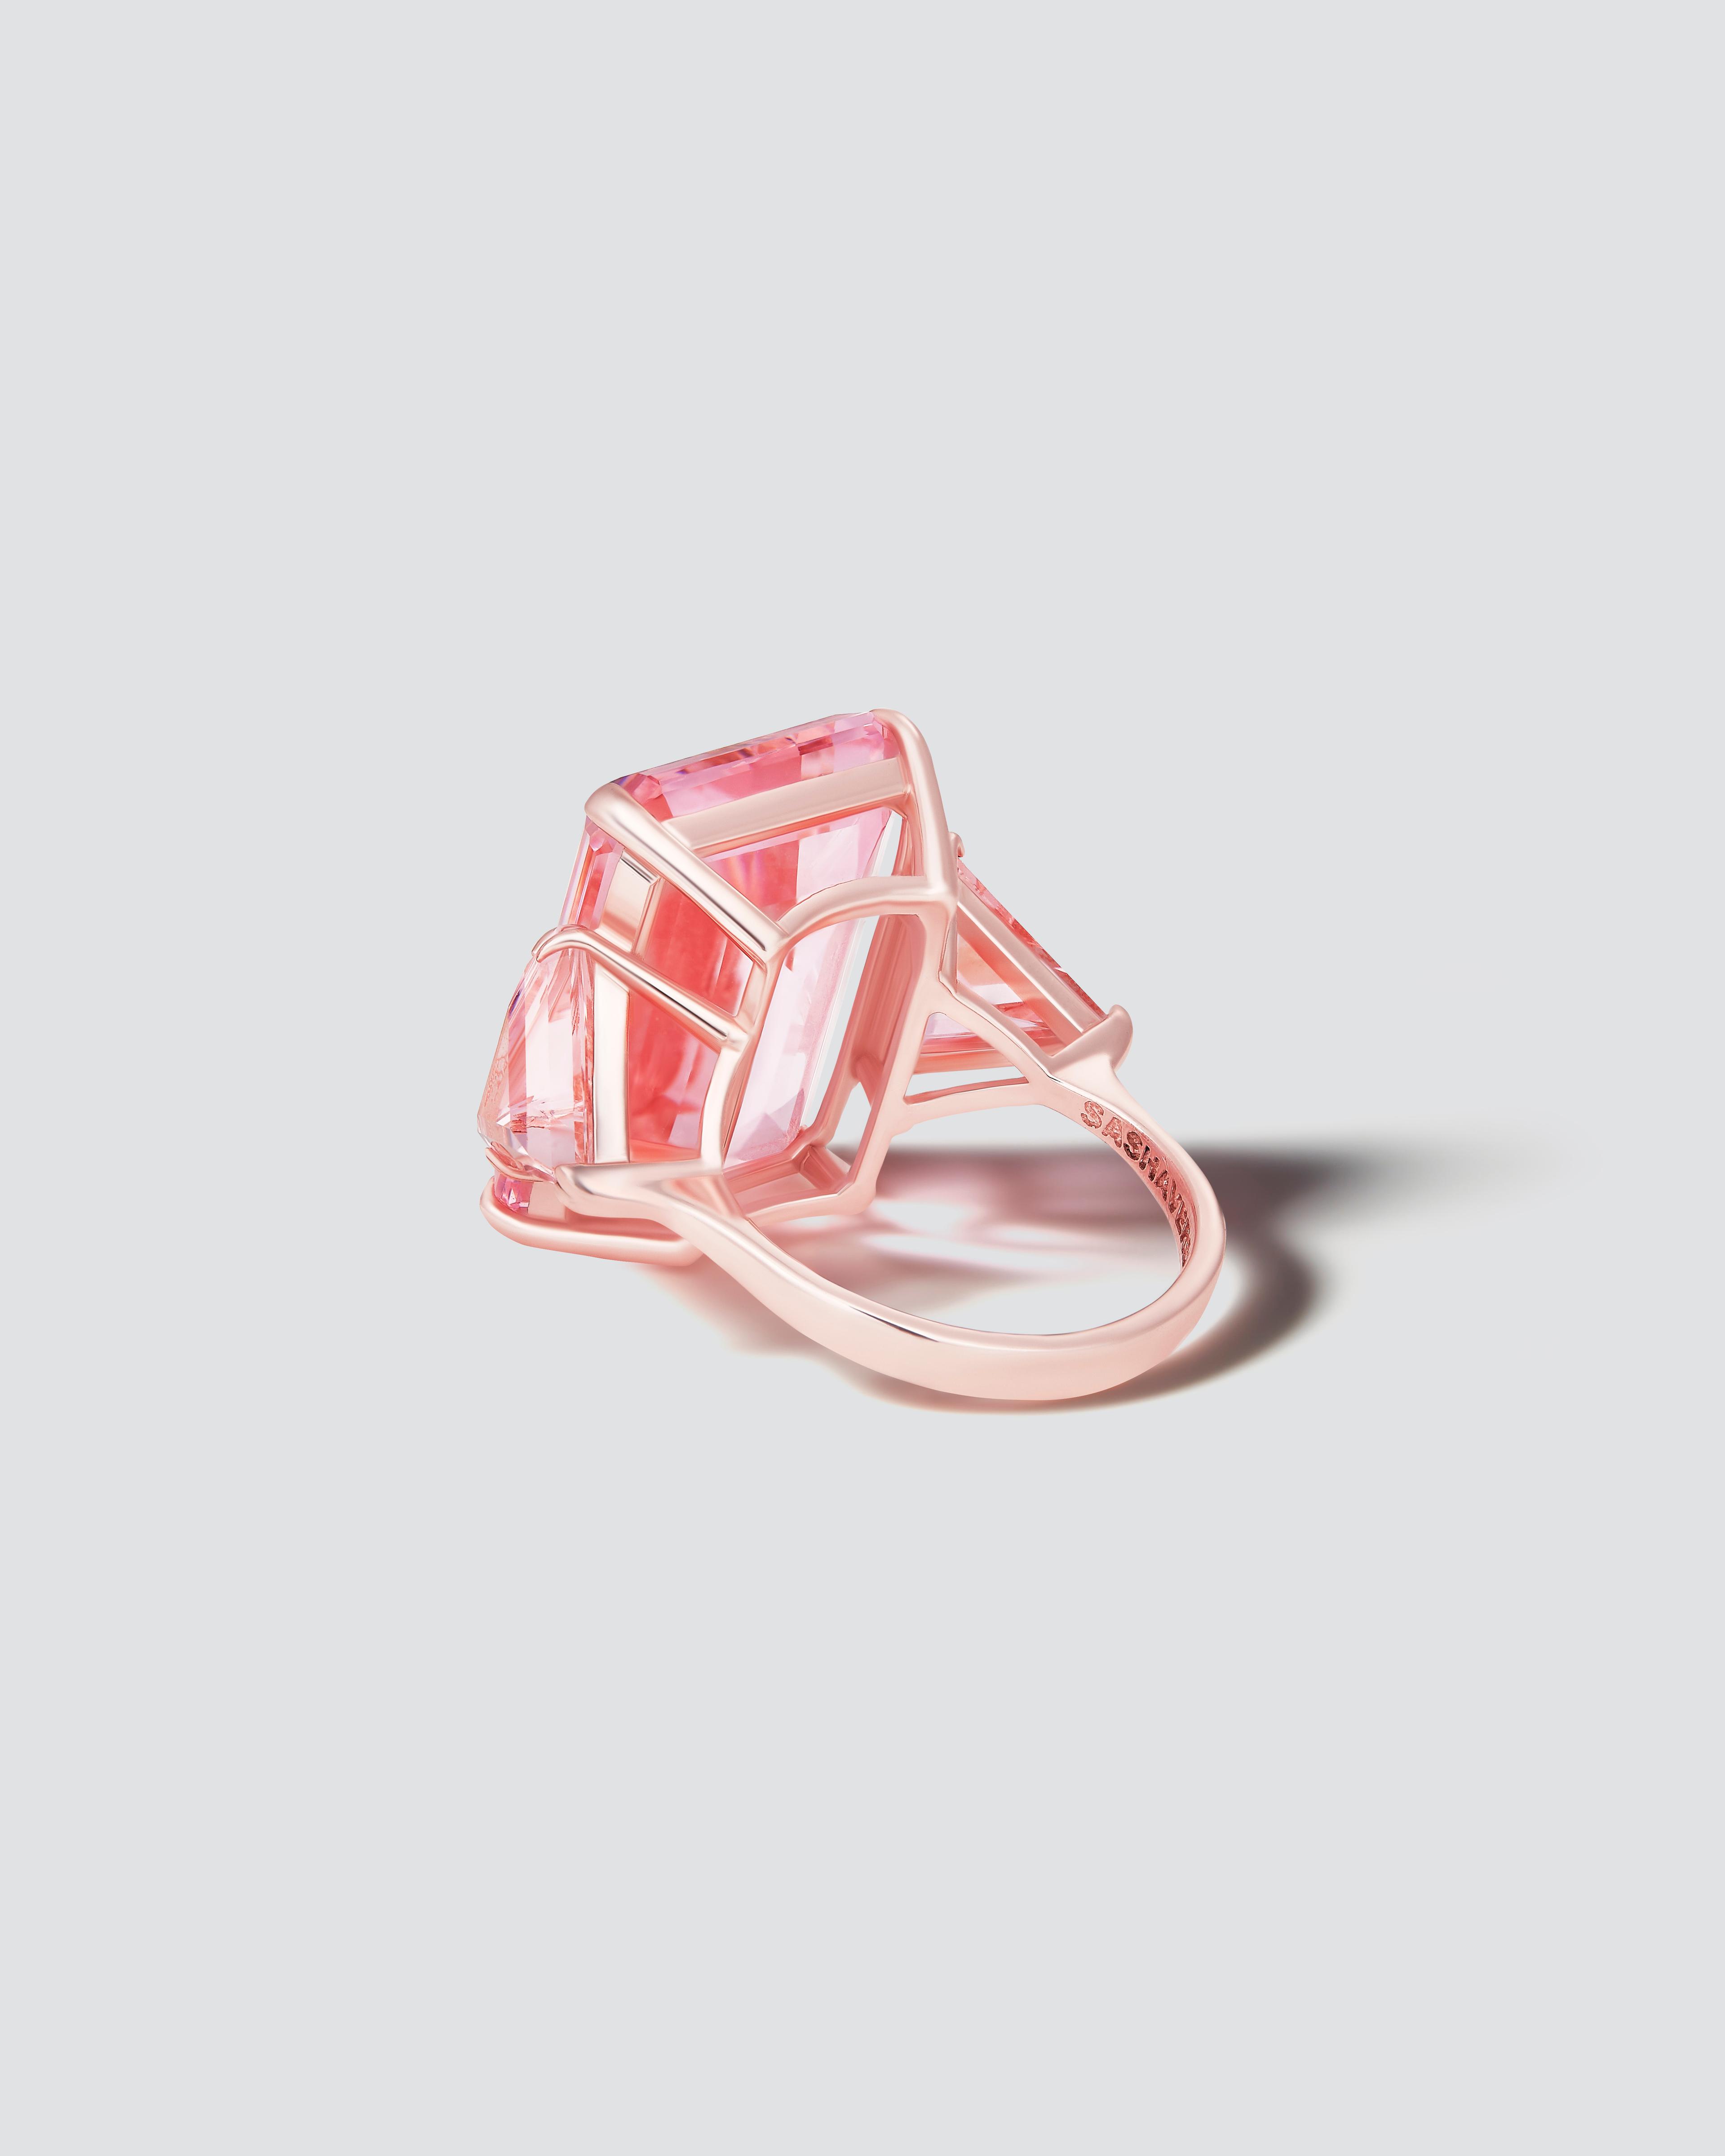 Pink emerald cut ring